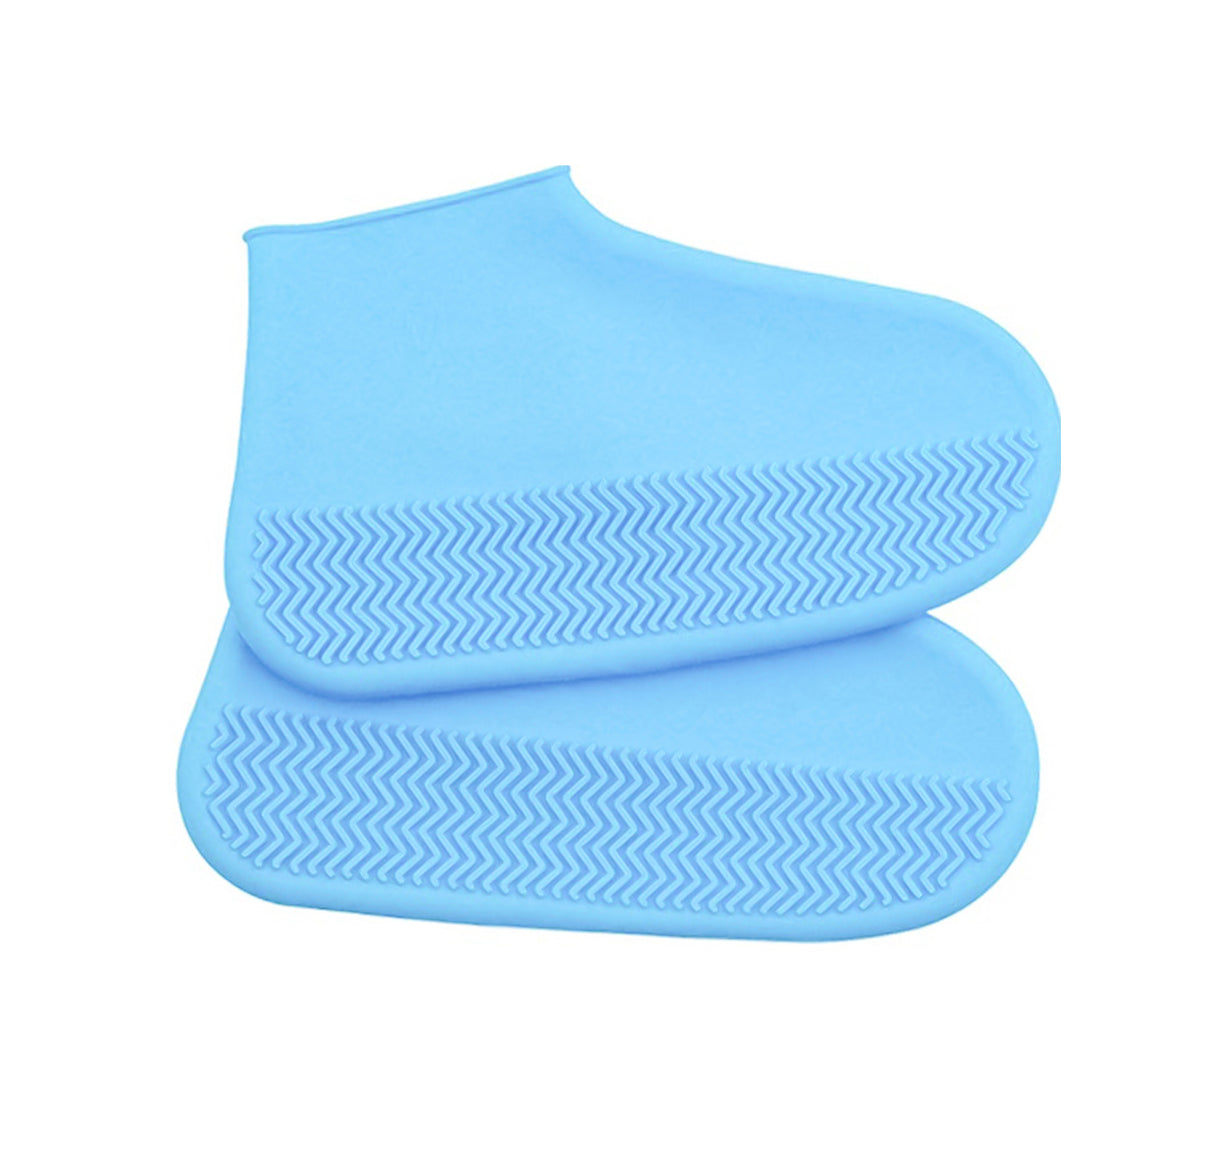 Grey Shoe Protection Covers • غطاء حماية للأحذية رمادي - plantnmore